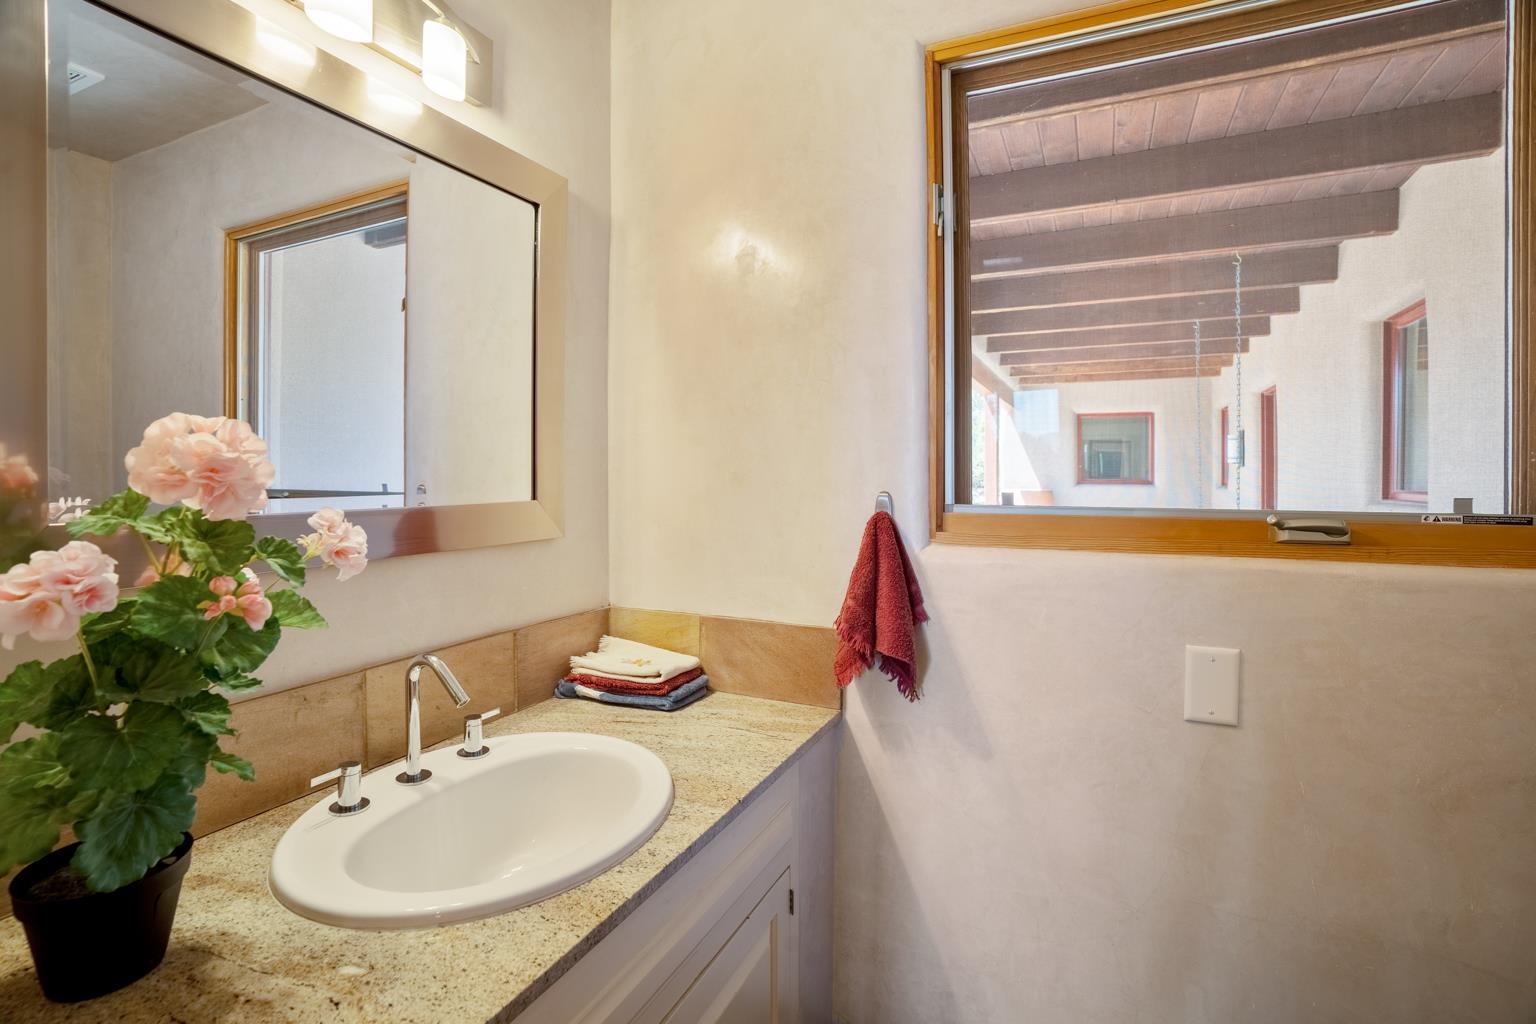 276 Chula Vista, Santa Fe, New Mexico 87501, 4 Bedrooms Bedrooms, ,4 BathroomsBathrooms,Residential,For Sale,276 Chula Vista,202201764